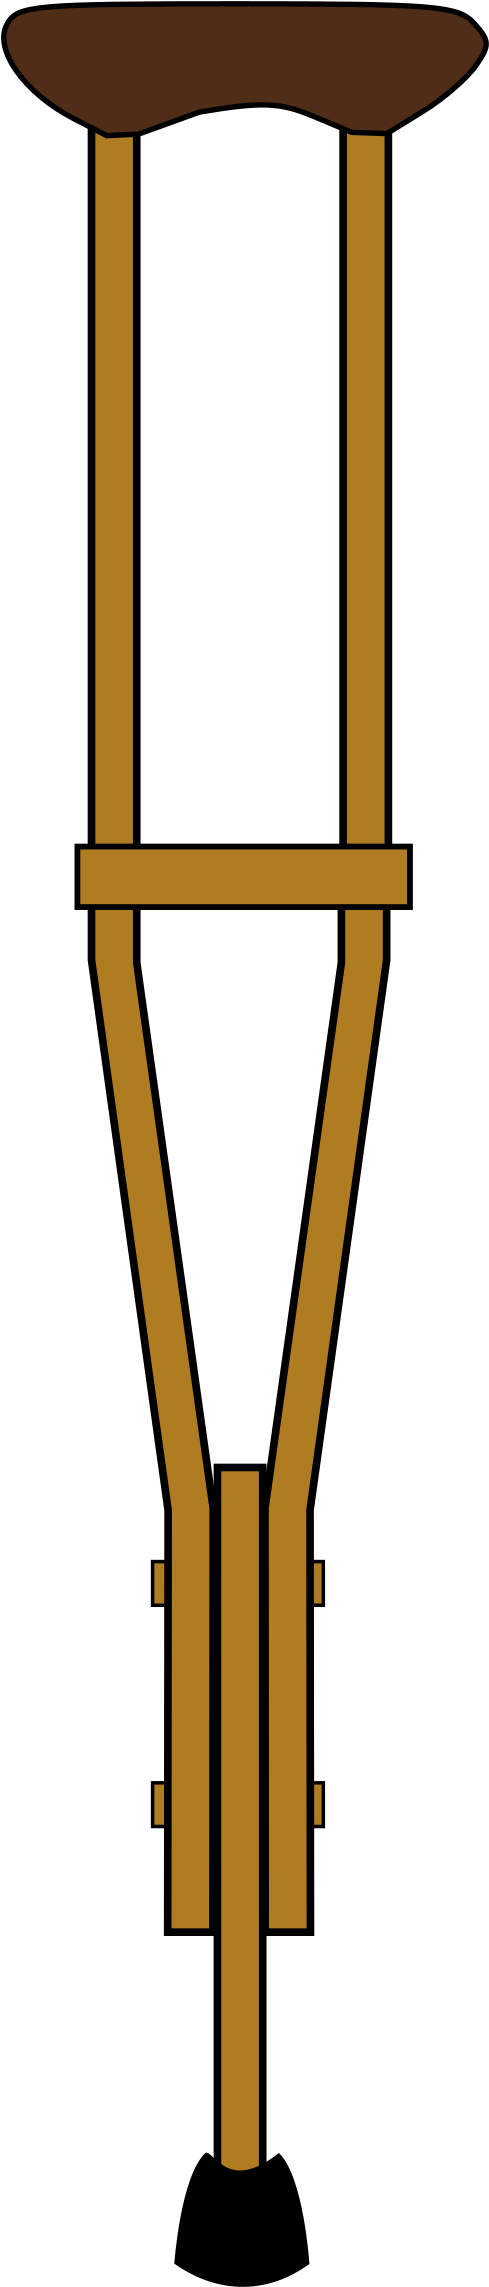 Wooden Crutch - Crutches Clipart Png (602x2400)